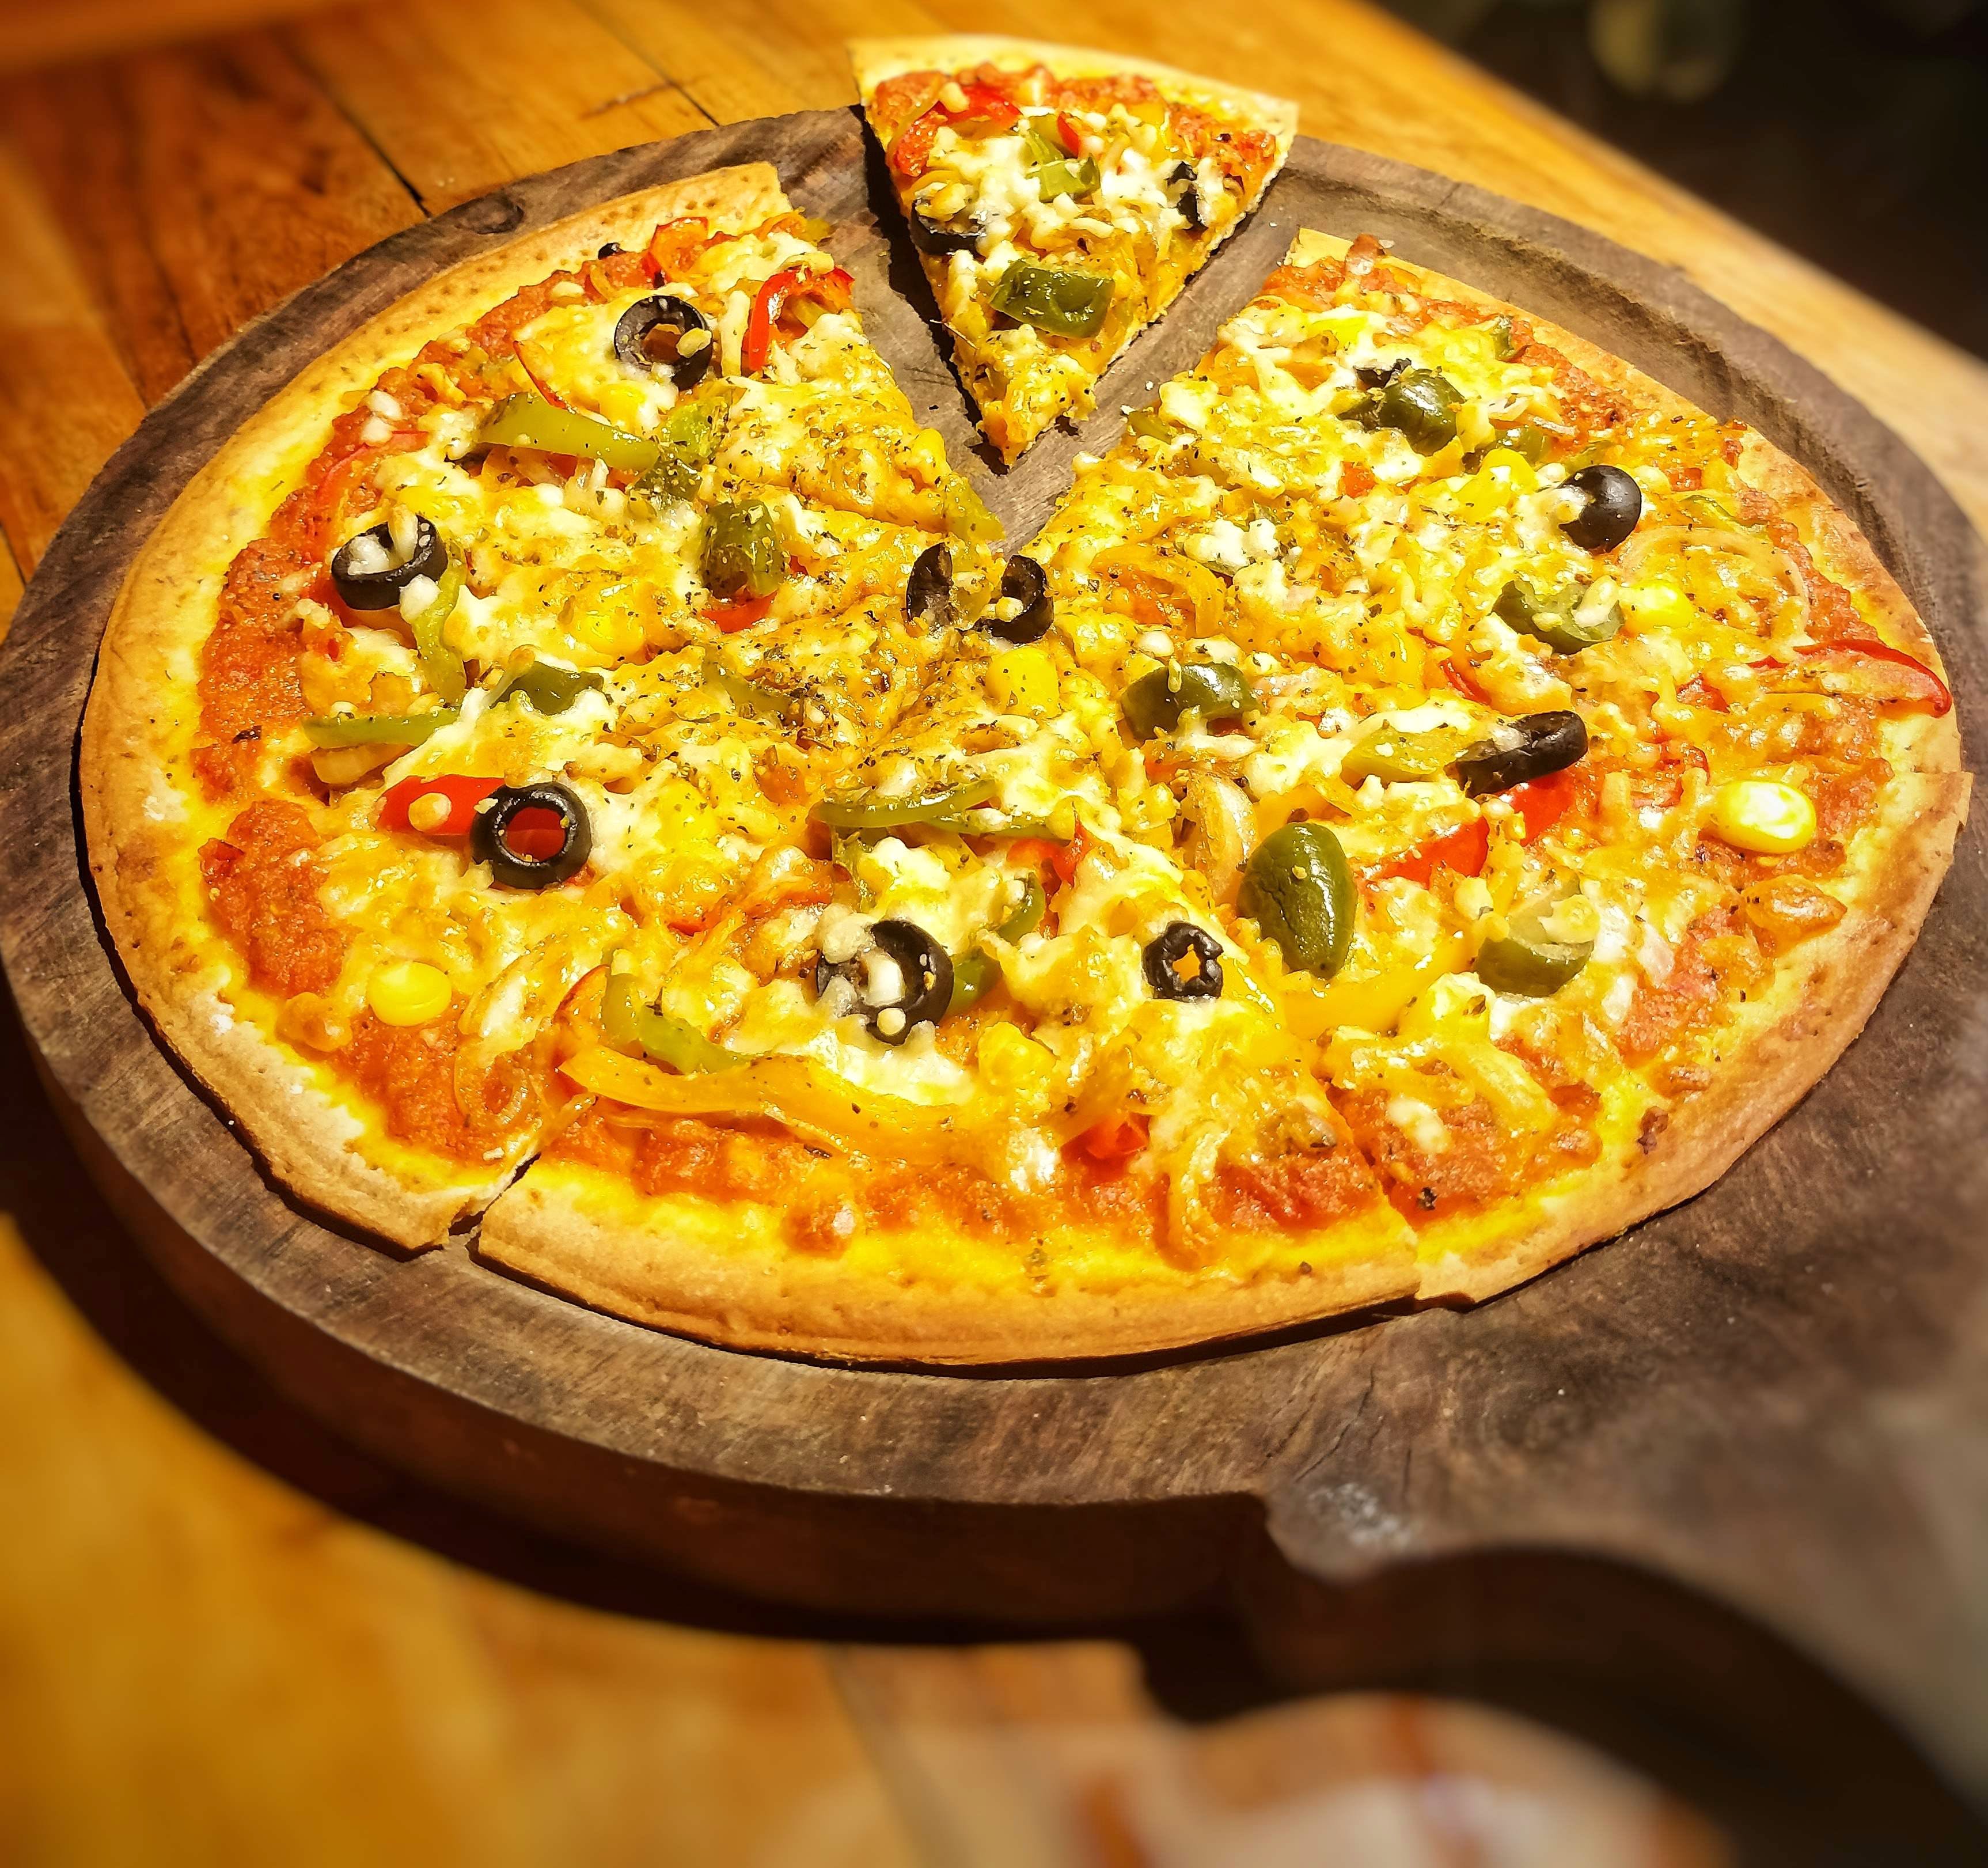 Dish,Food,Cuisine,Pizza cheese,Pizza,California-style pizza,Ingredient,Junk food,Italian food,Tarte flambée